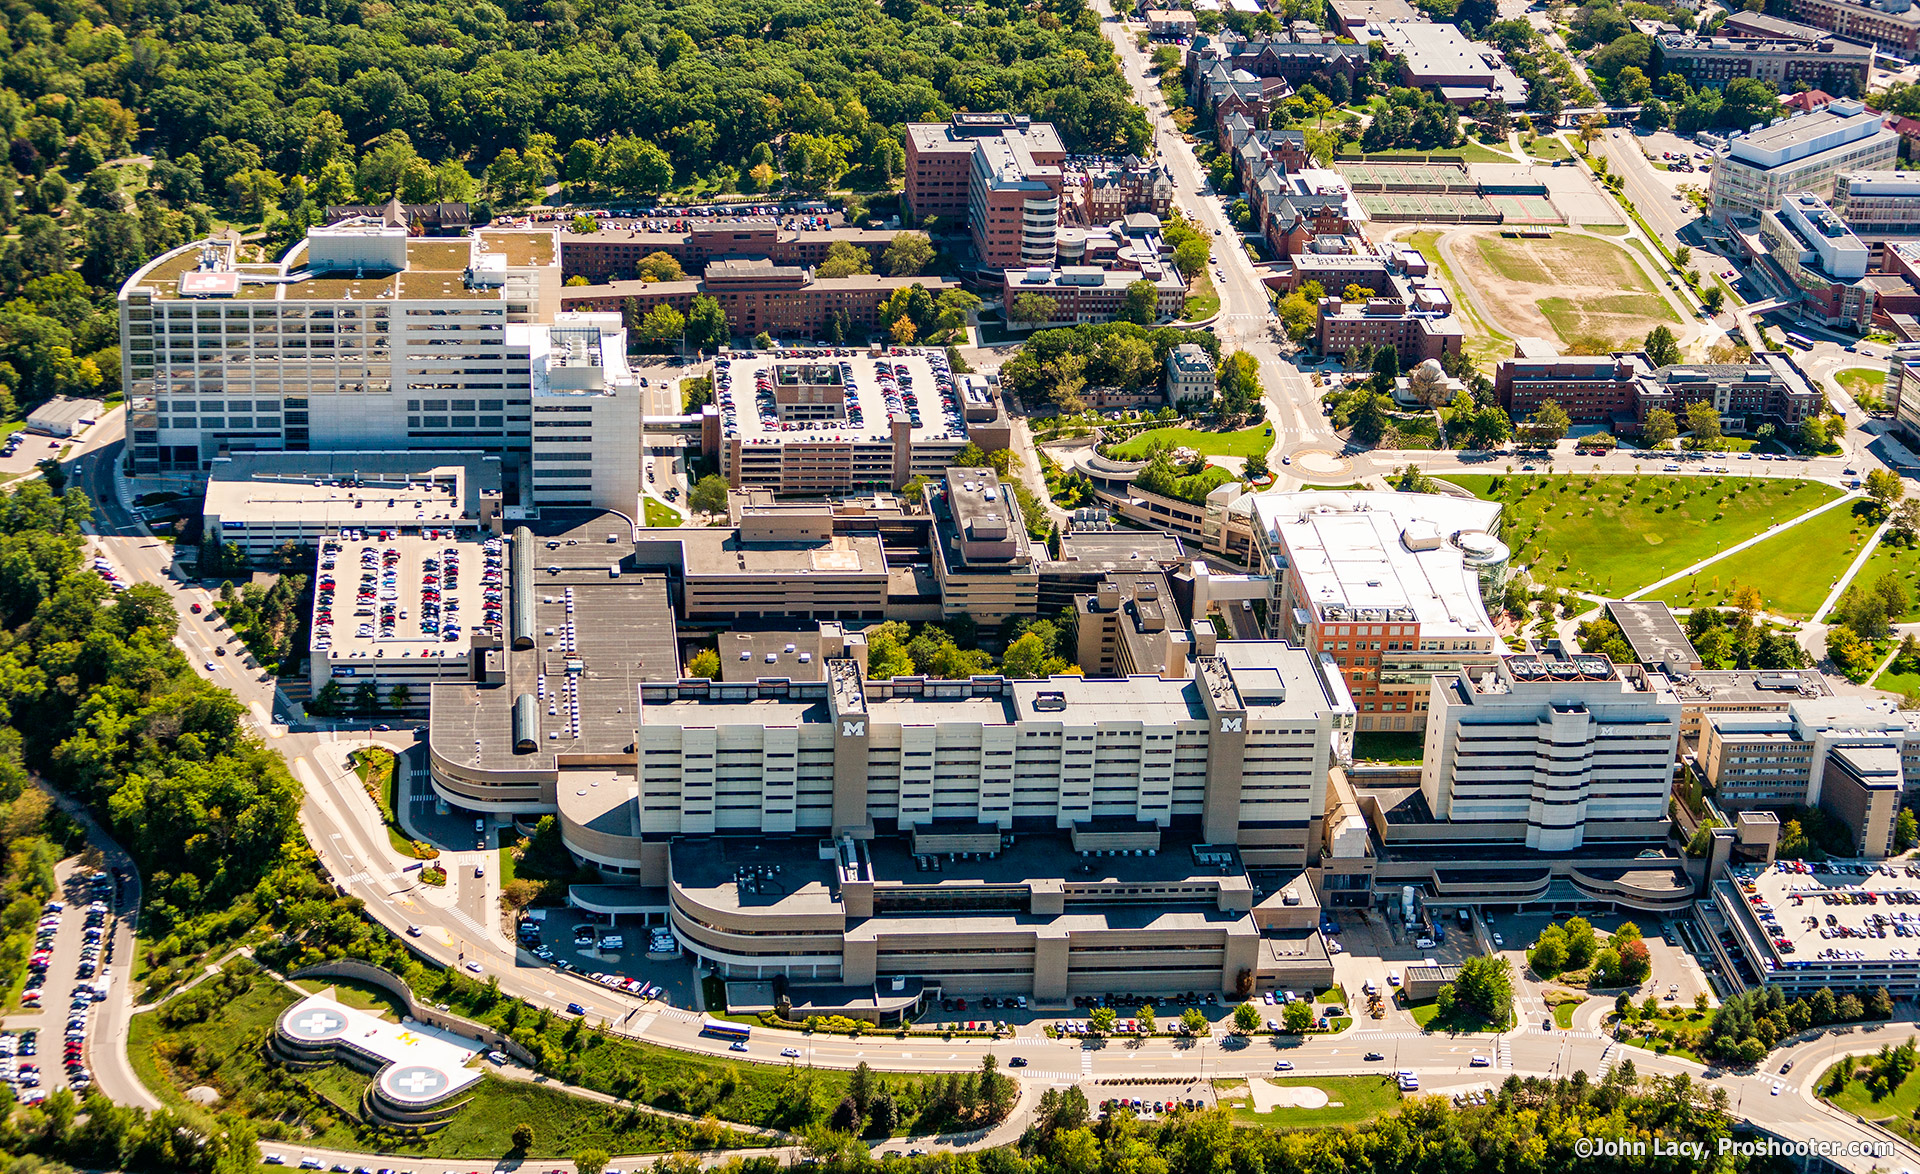 University of Michigan Hospital by Proshooter